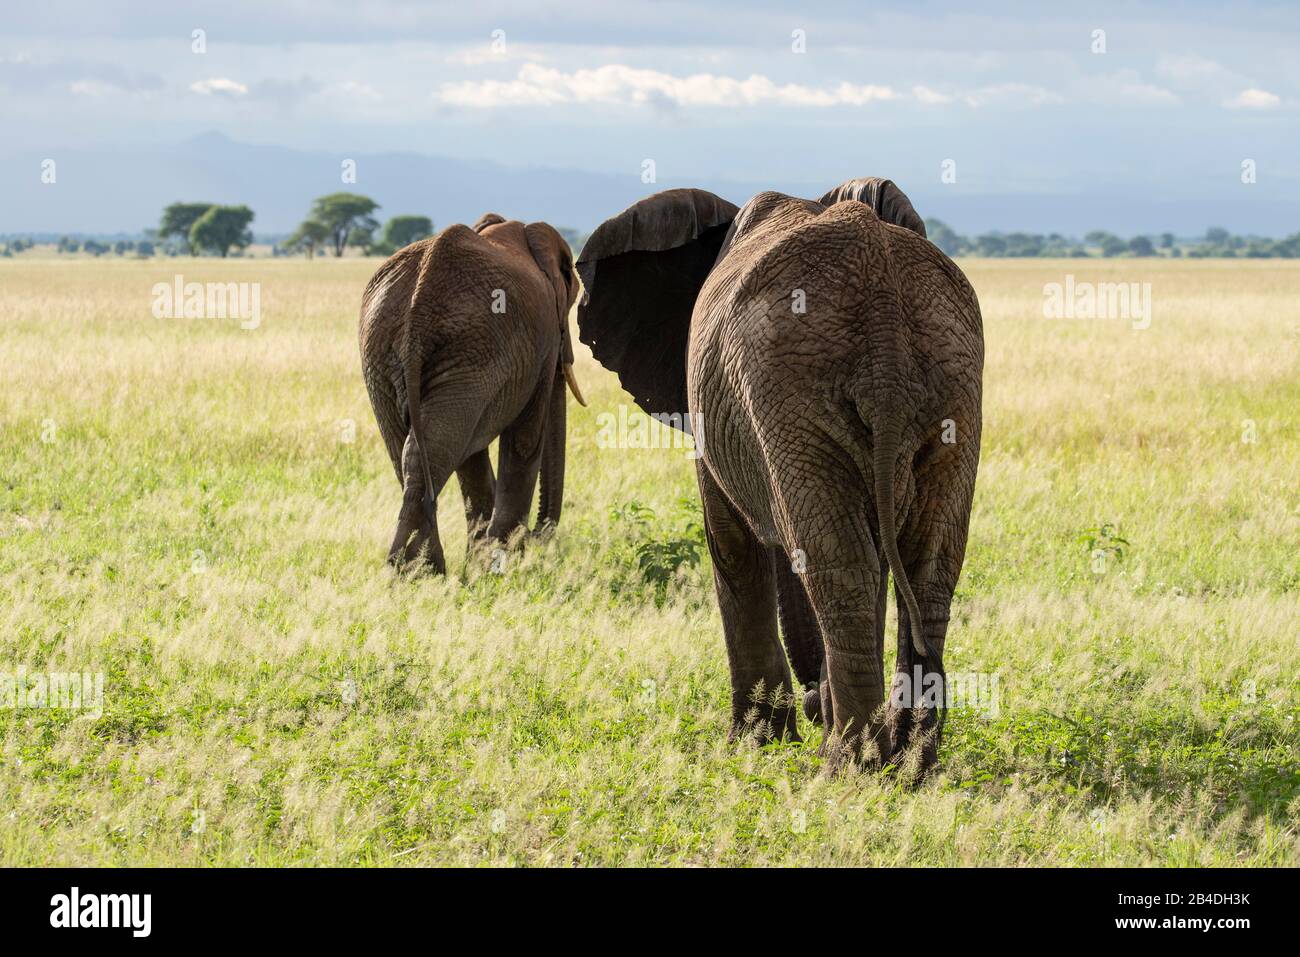 Tanzania, Norte de Tanzania, Parque Nacional Serengeti, Cráter Ngorongoro, Tarangire, Arusha y Lago Manyara, dos elefantes africanos en la sabana, loxodonta africana Foto de stock